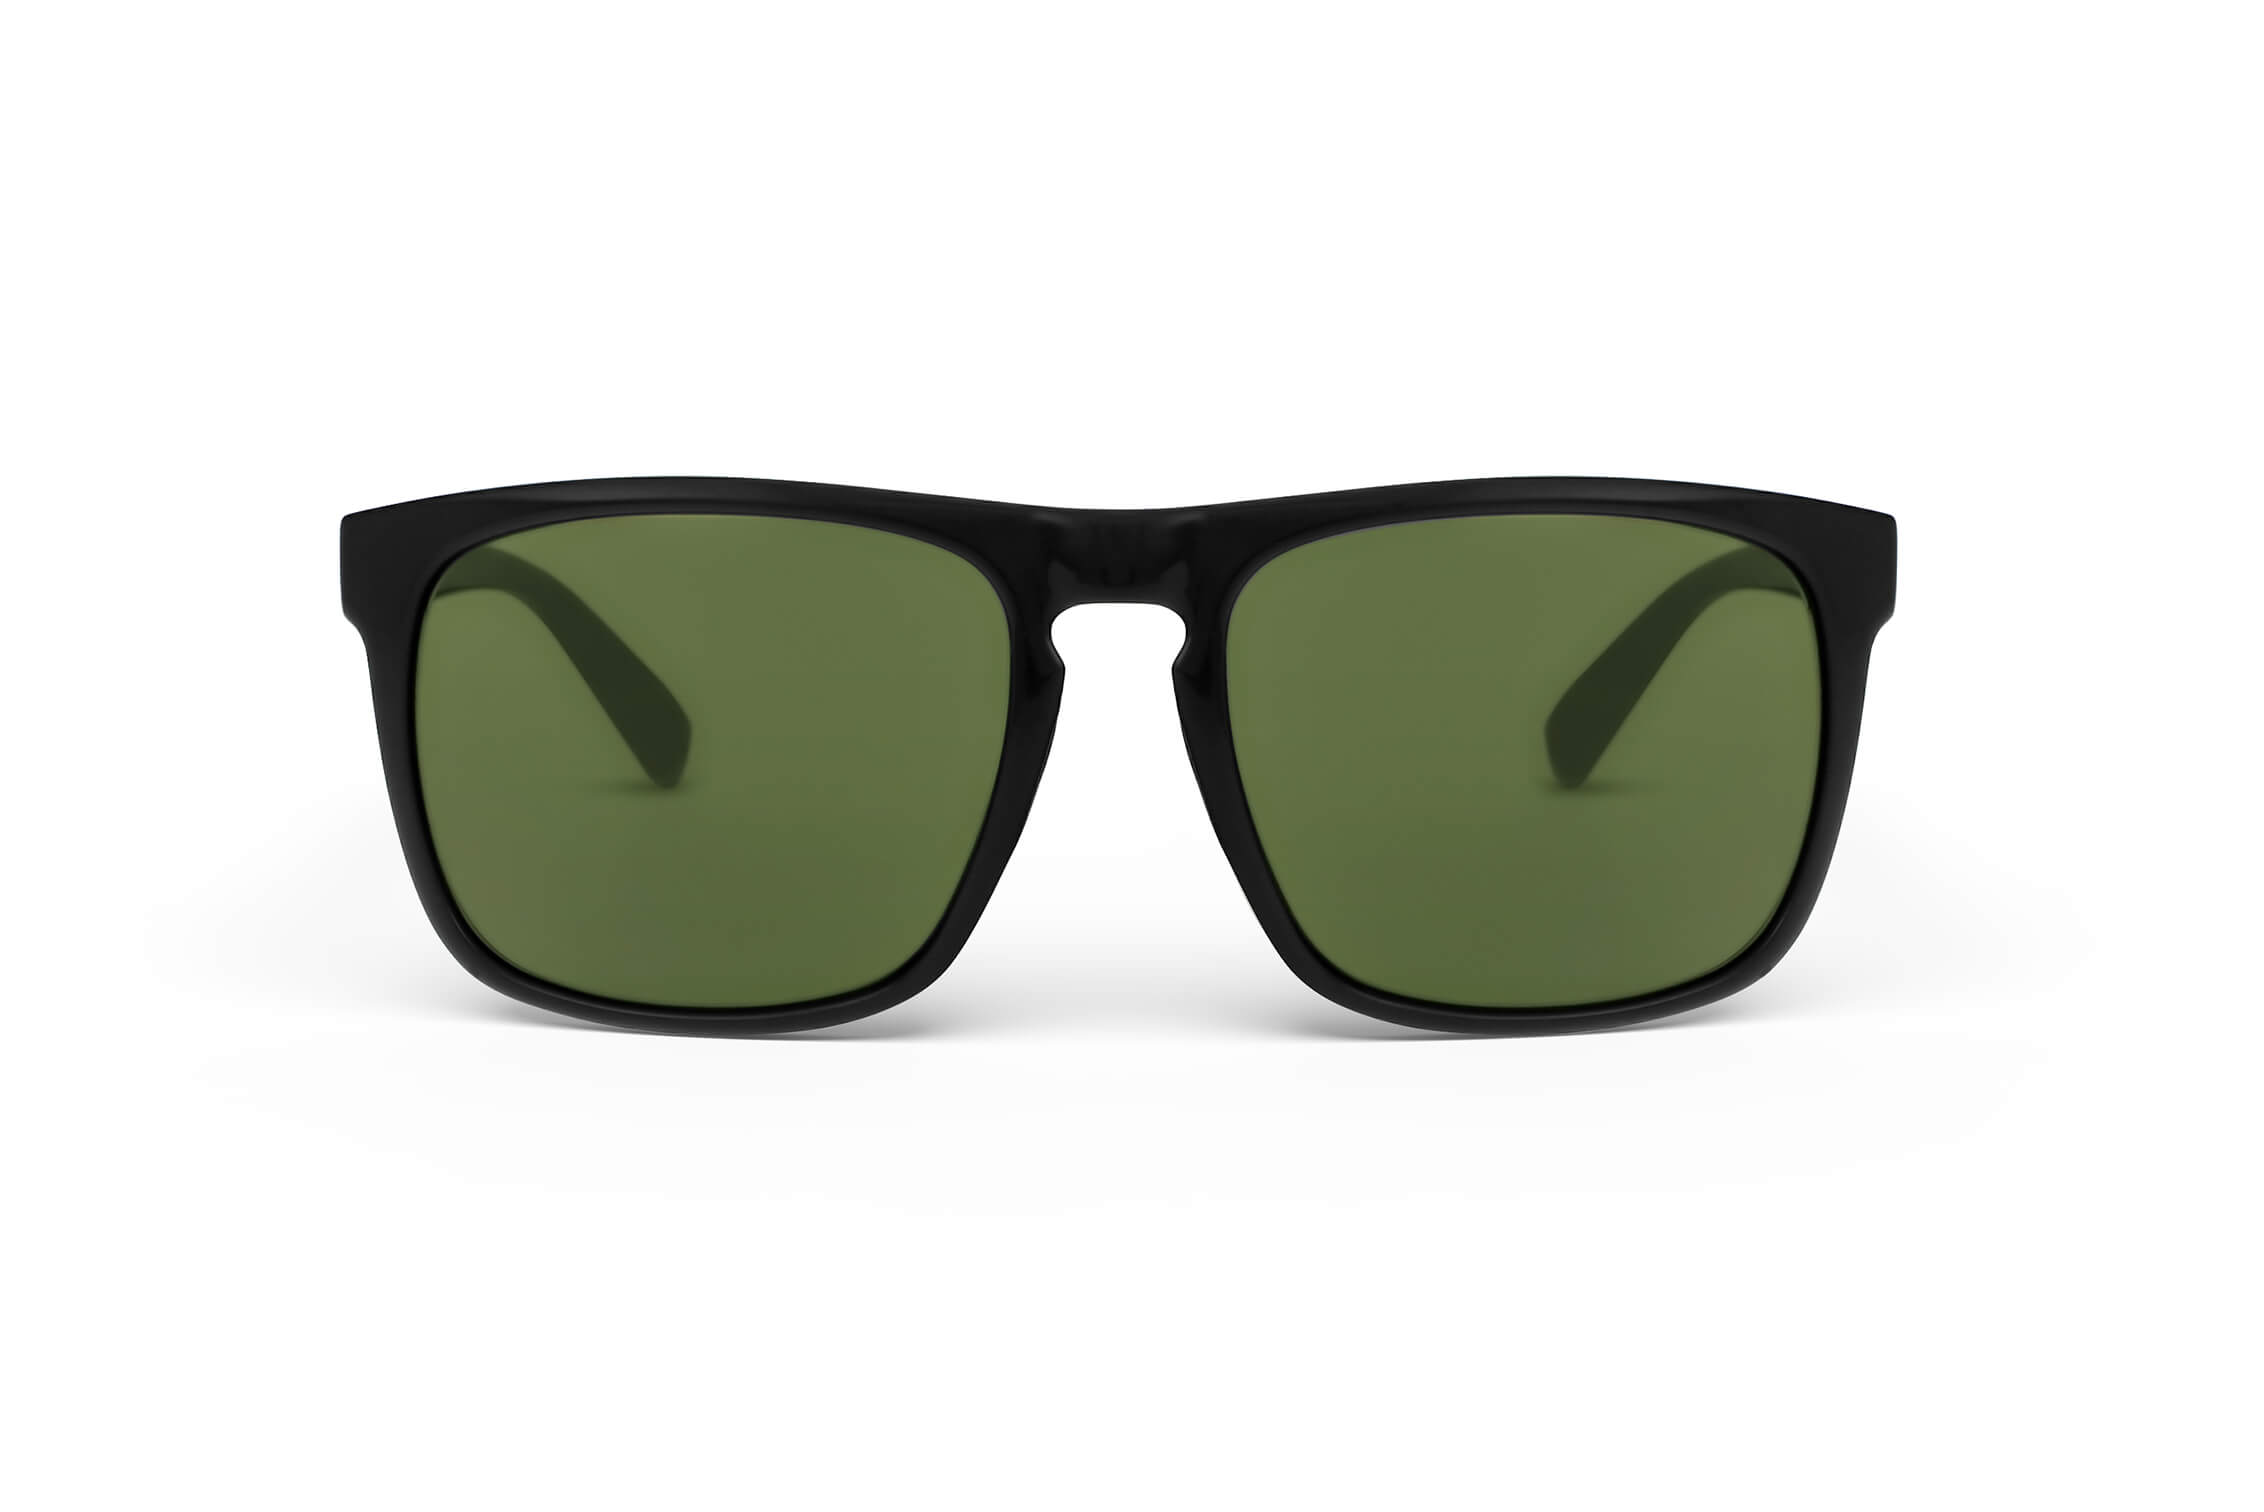 Sonnenbrille Tempelhofer Black Glossy Green Preisgekrönte Berlin | Lilienthal - Designs